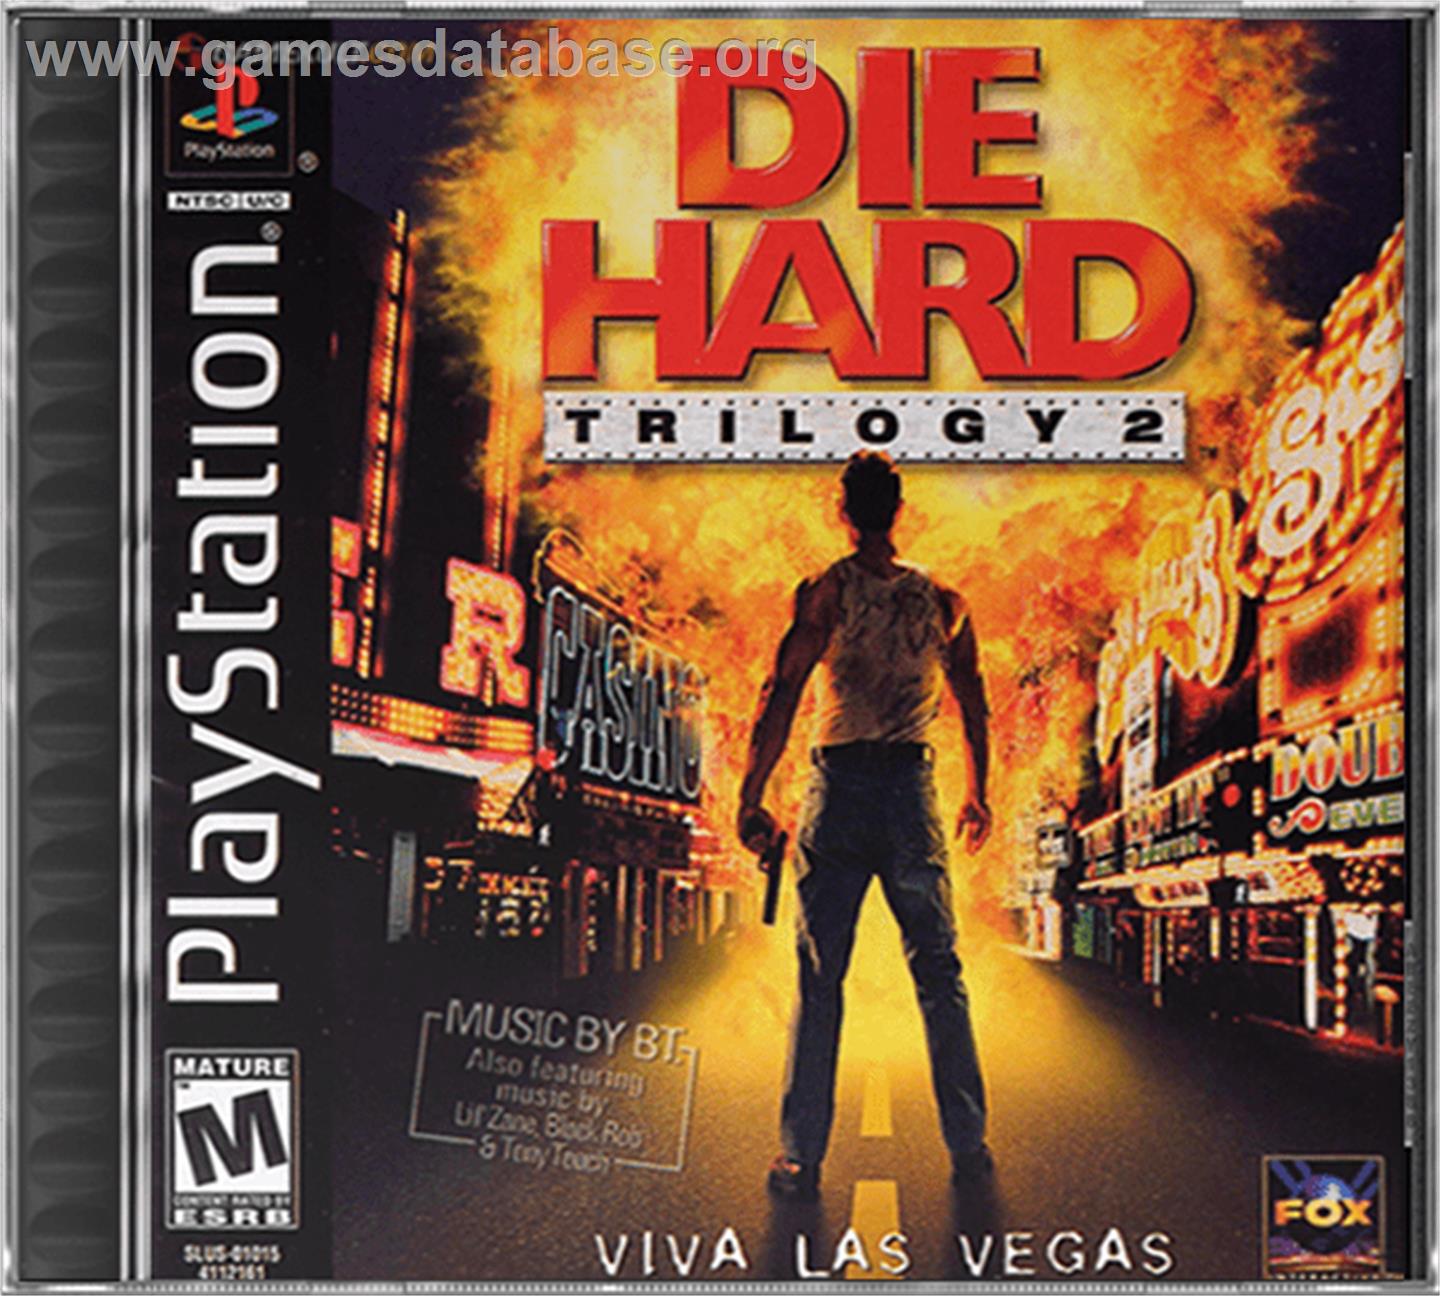 Die Hard Trilogy 2: Viva Las Vegas - Sony Playstation - Artwork - Box